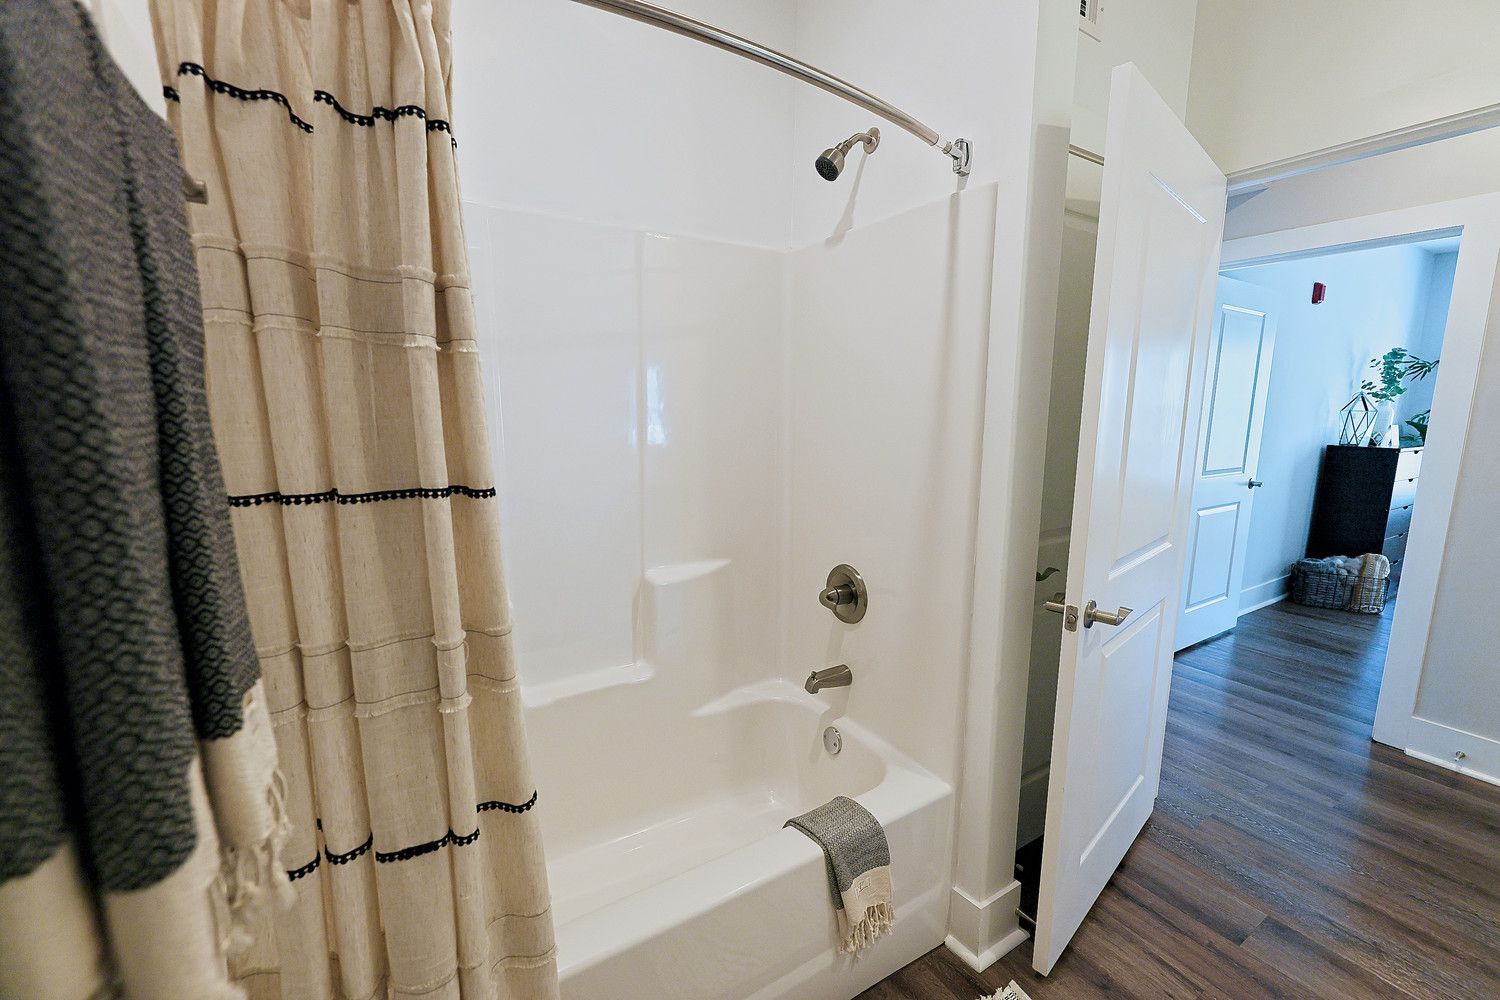 Pointe Grand Kingsland East Apartment Homes bathroom with bath/shower.